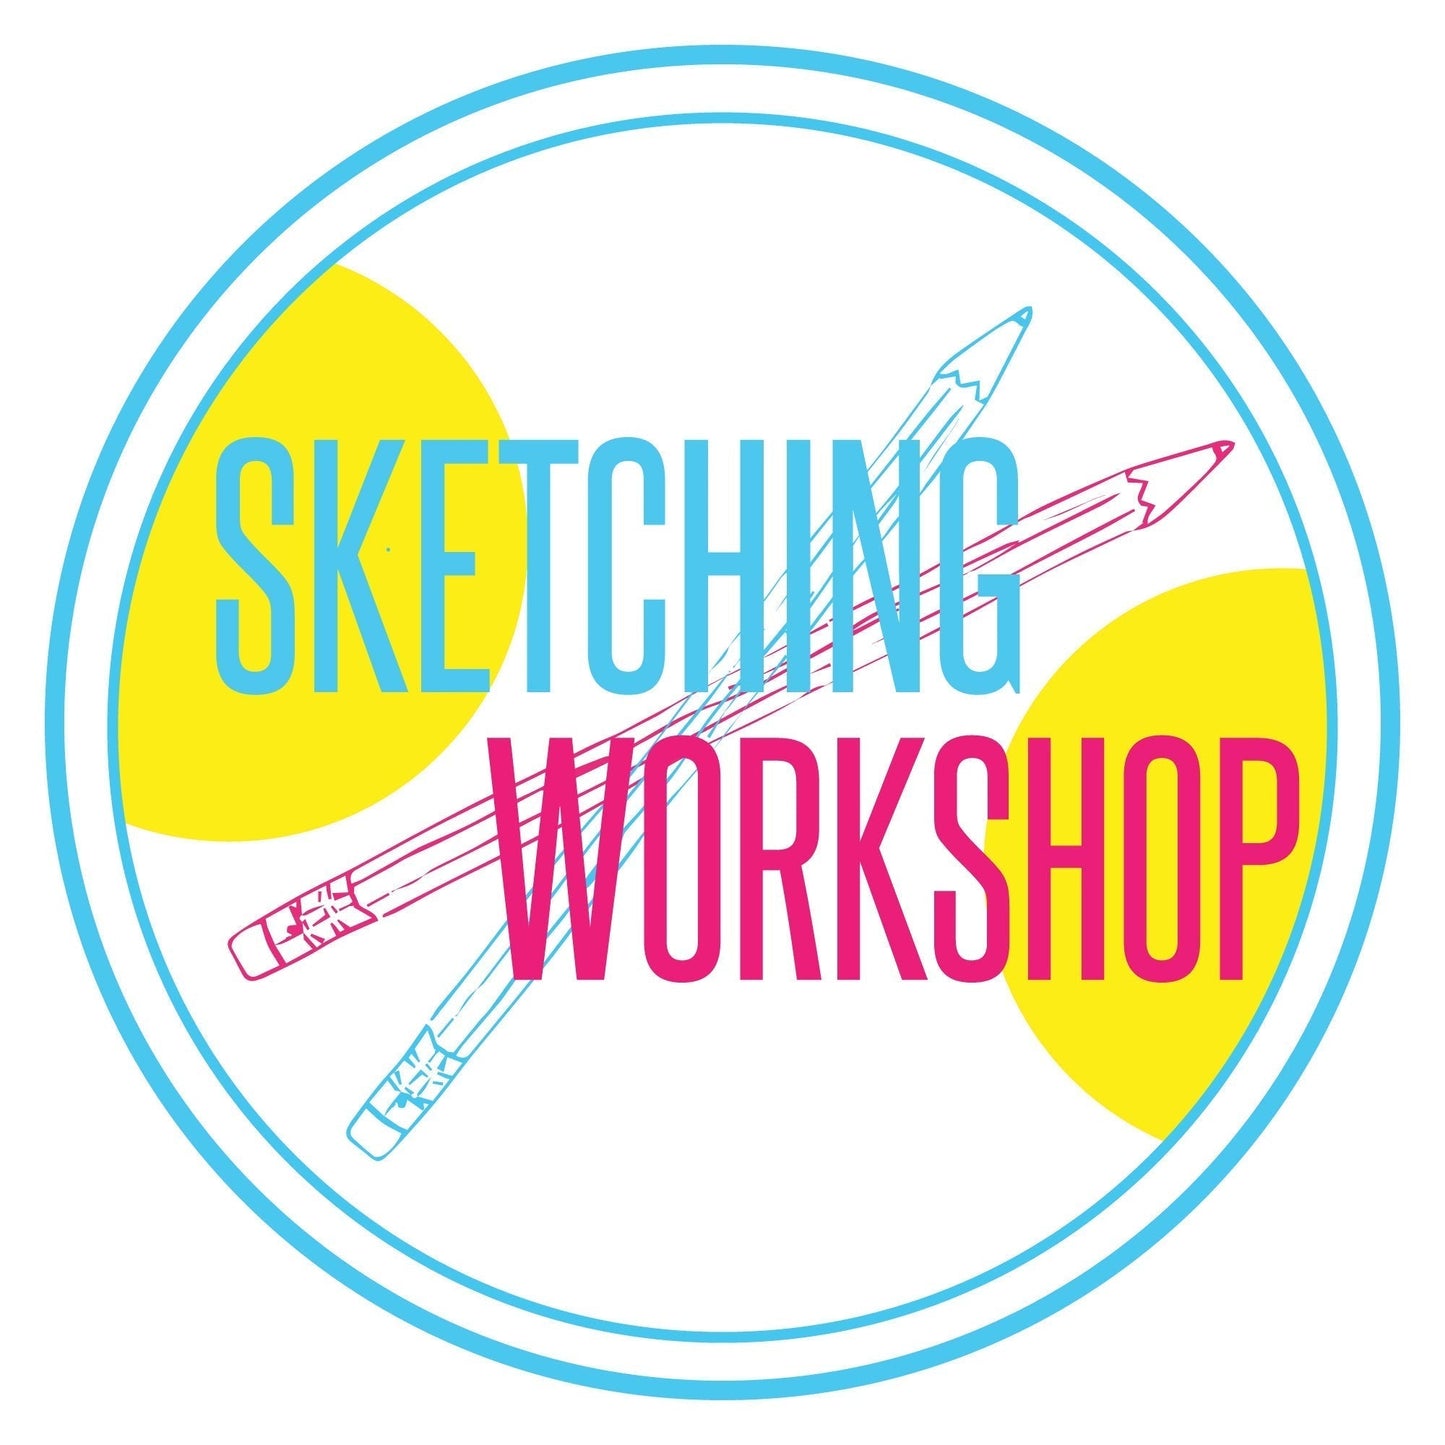 Sketching Workshop: Fashion Around the World - Saturday, January 20, 9am-11am